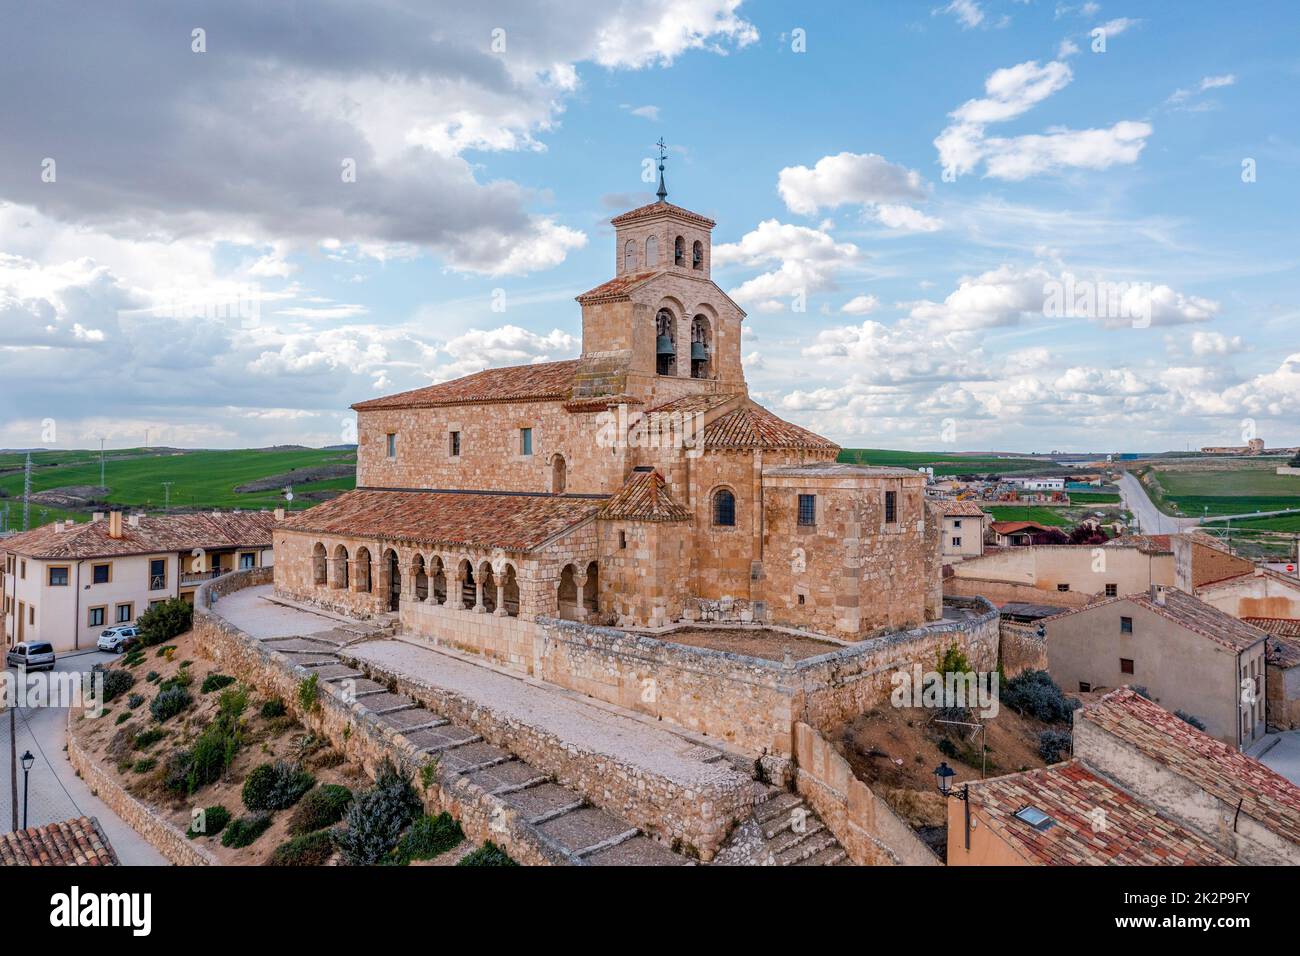 church Santa Maria del Rivero, romanesque style landmark and public monument from 12th century, in San Esteban de Gormaz, Soria, Spain Stock Photo